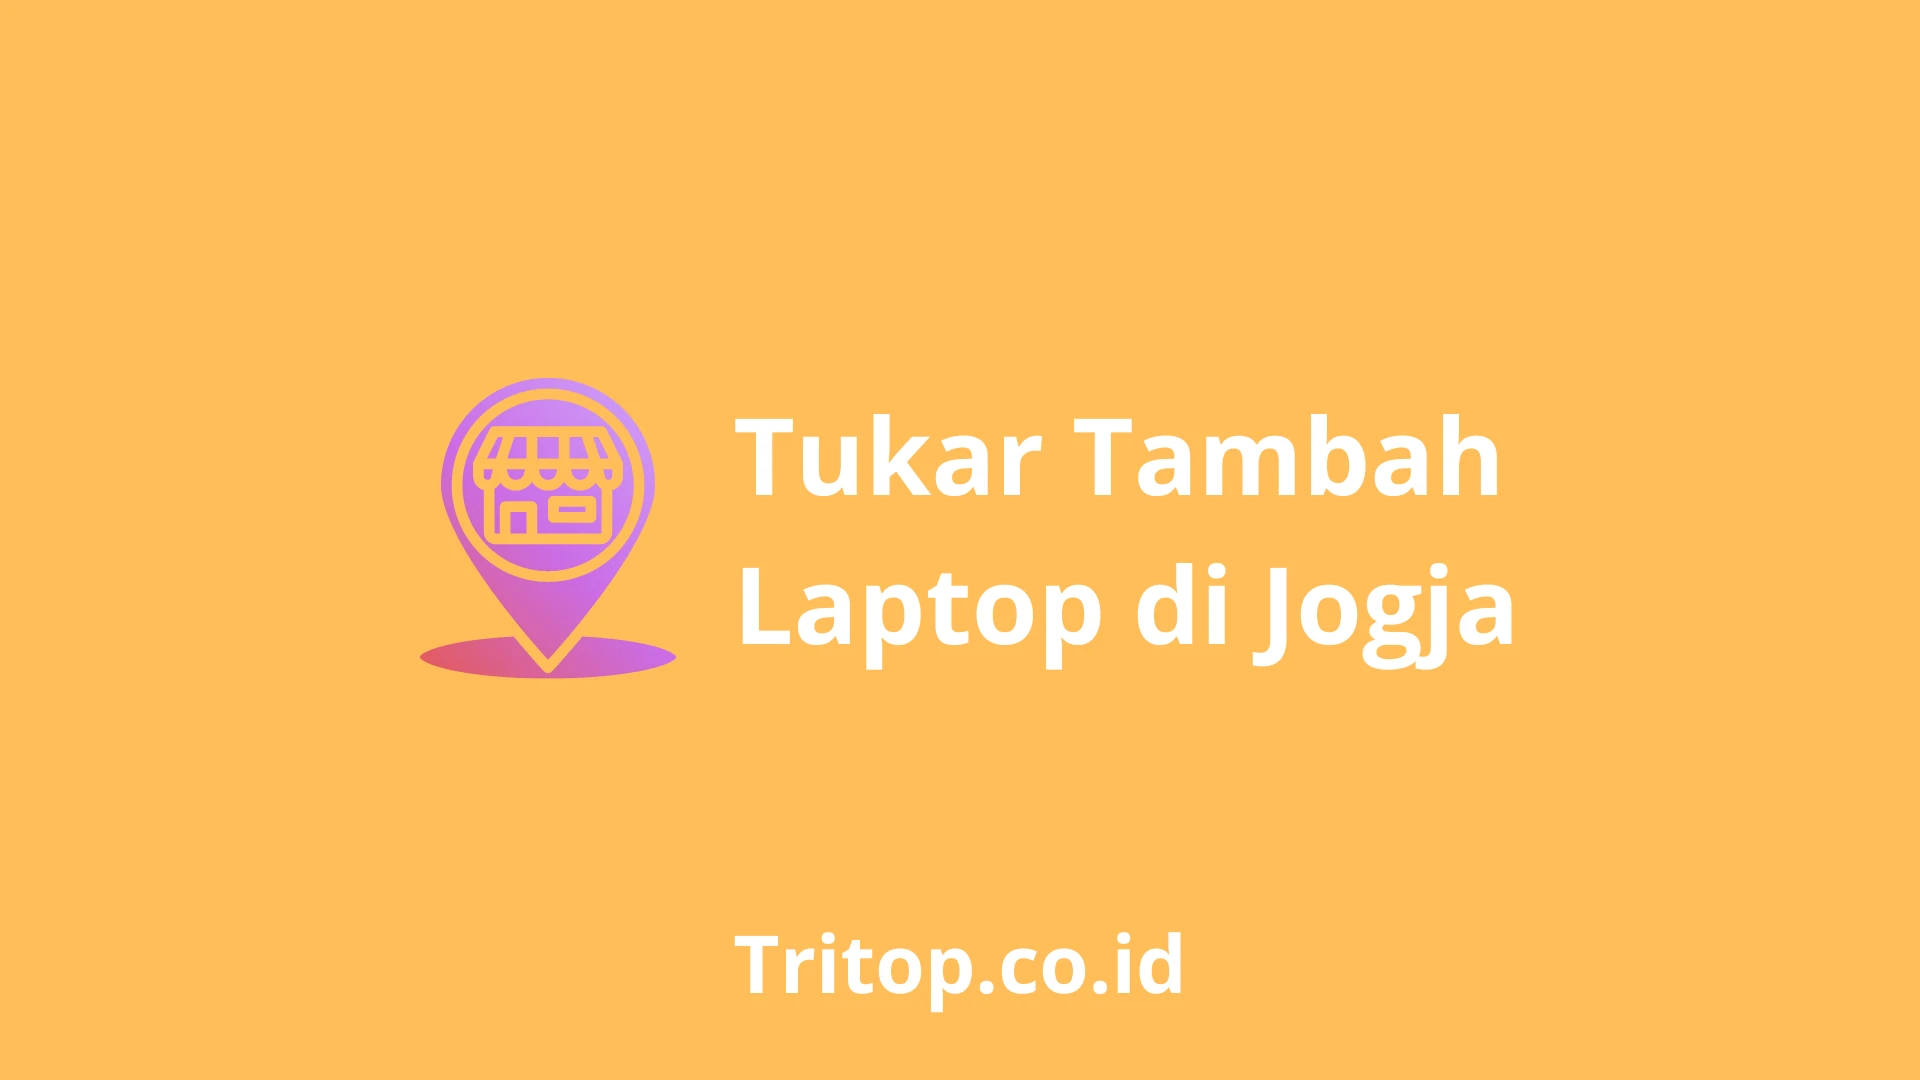 Tukar Tambah Laptop Jogja tritop.co.id